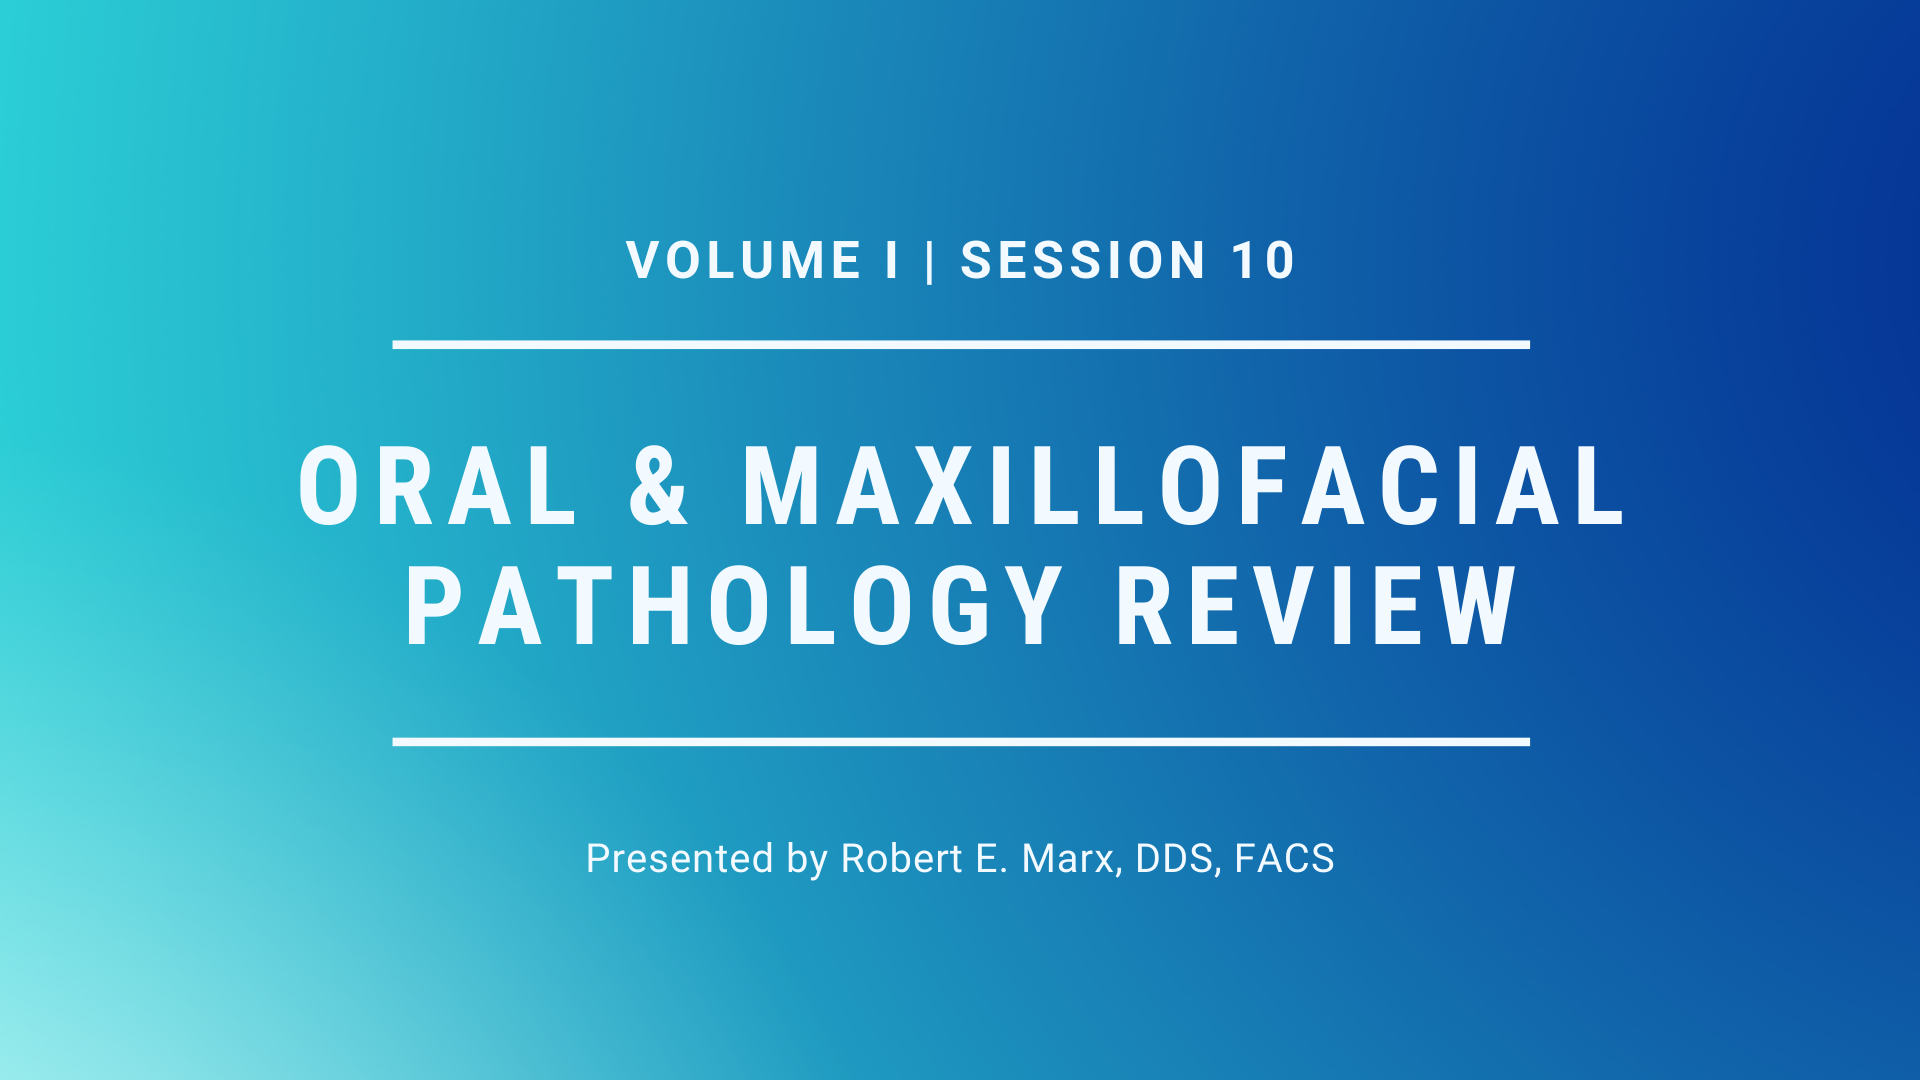 Oral & Maxillofacial Pathology Review – Volume I (OMFS) - Session 10